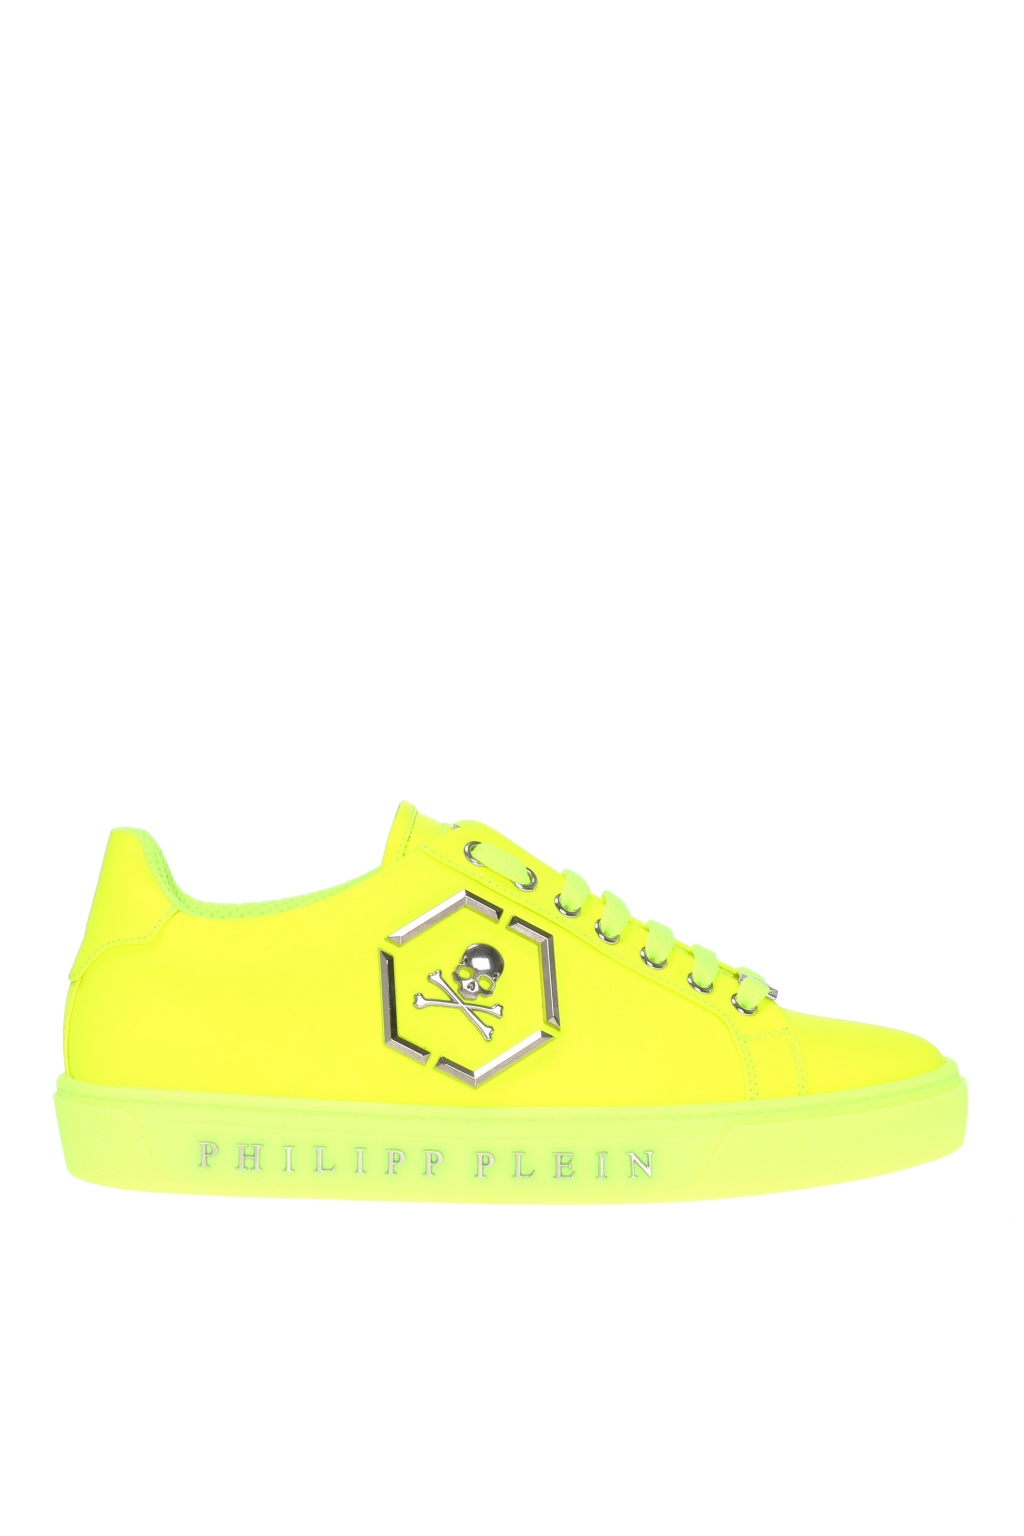 philipp plein yellow shoes